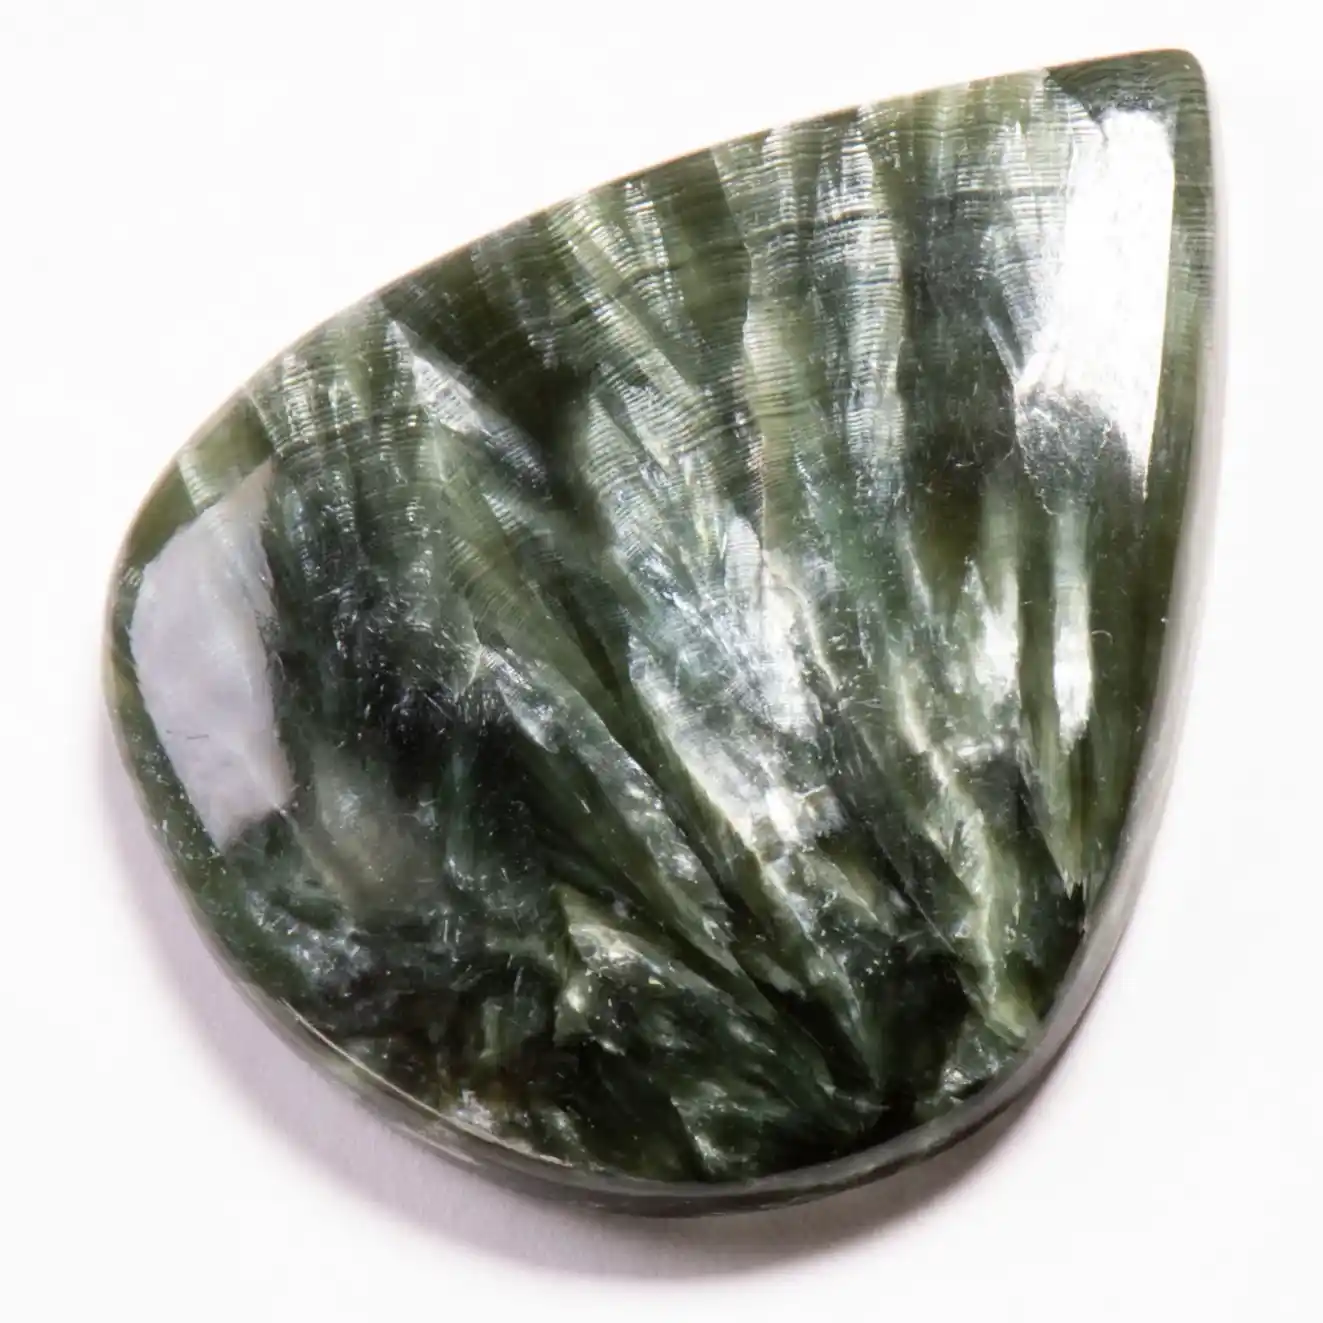 Polished seraphinite stone